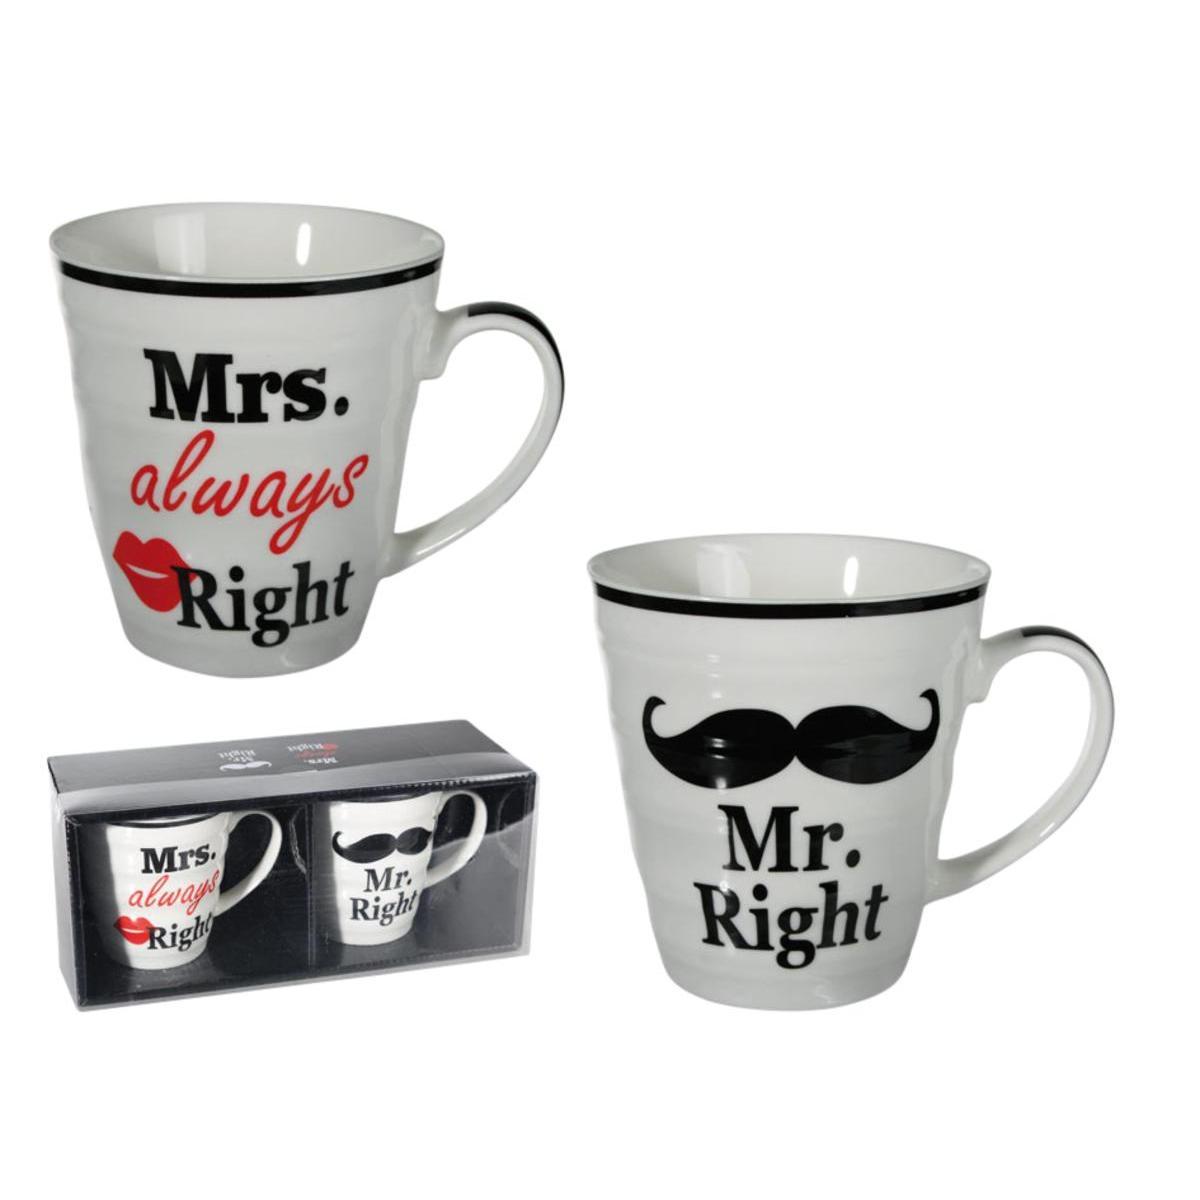 2 mugs Mr & Mrs